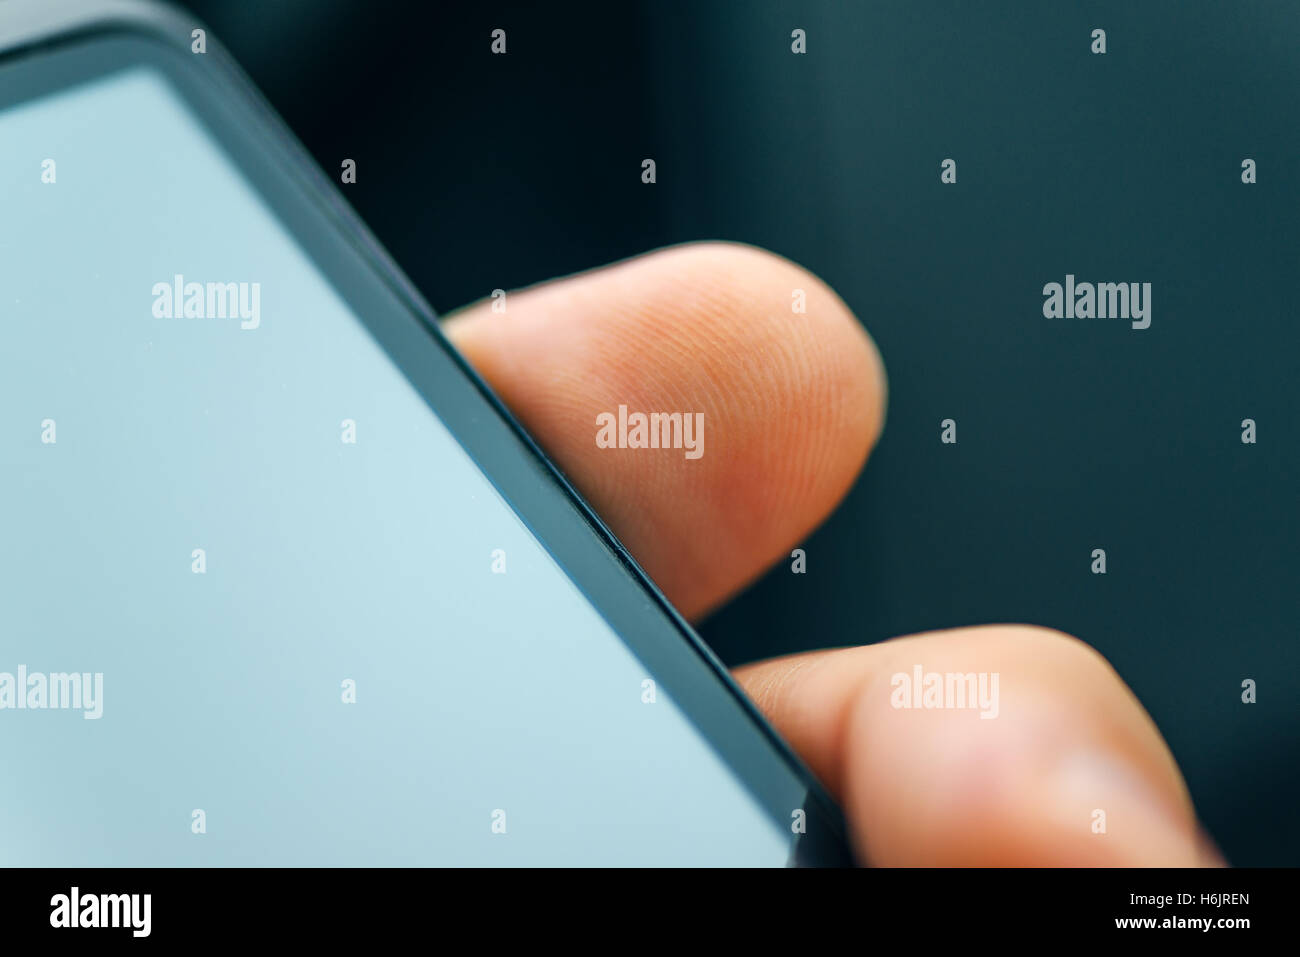 Unlocking smart phone with fingerprint sensor scan, close up with selective focus Stock Photo